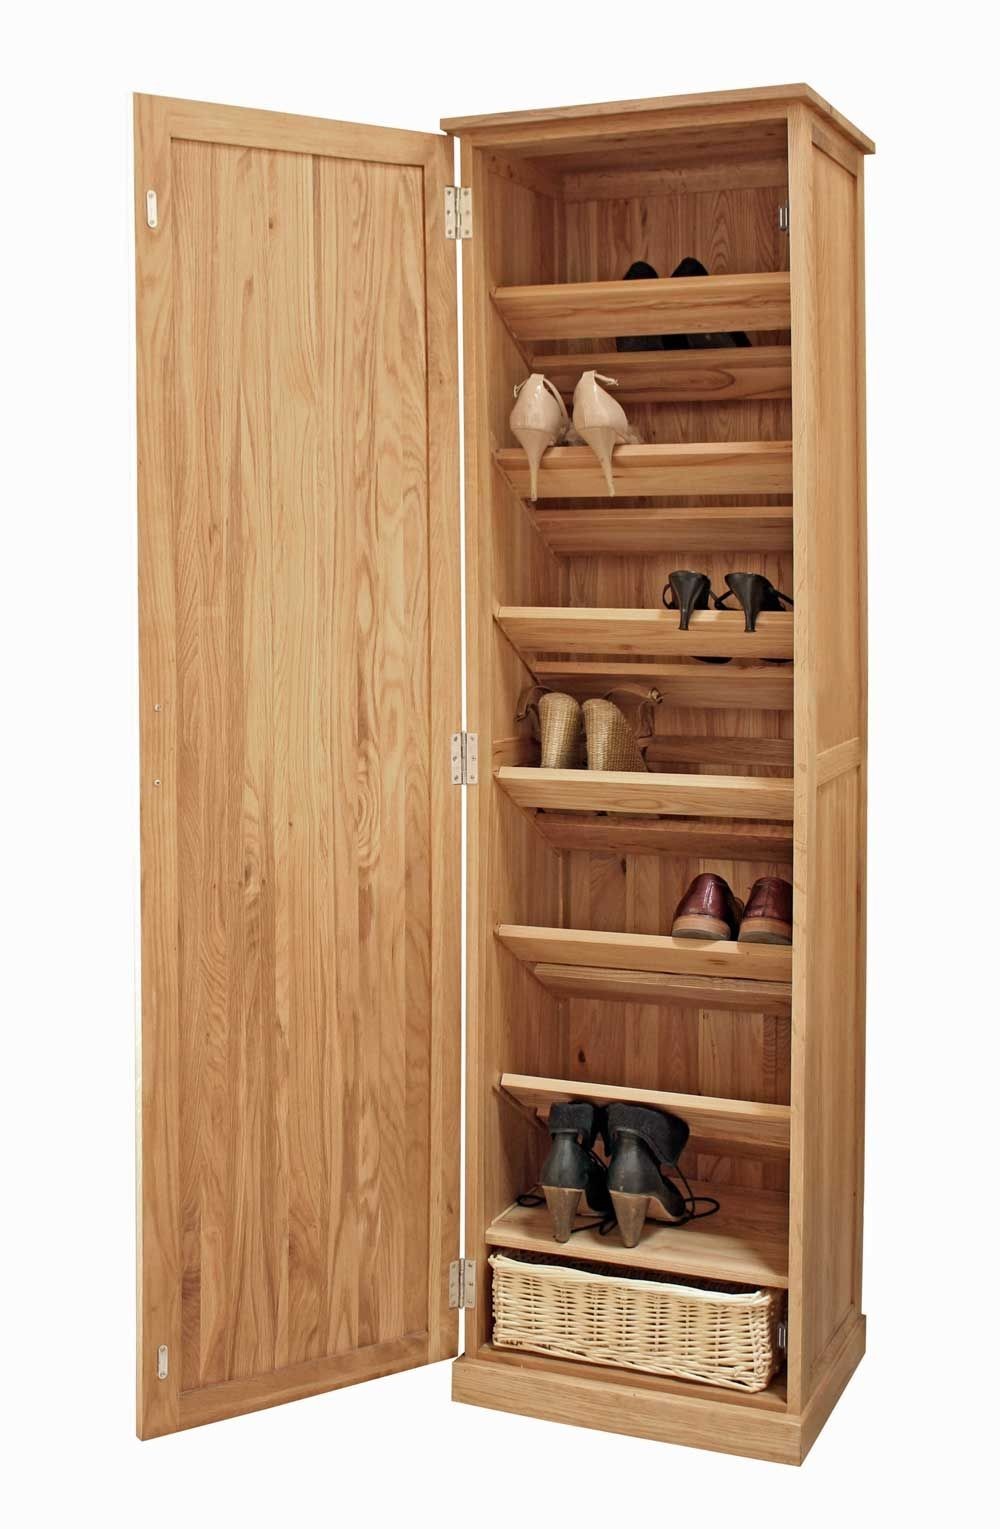 Tall narrow shoe storage